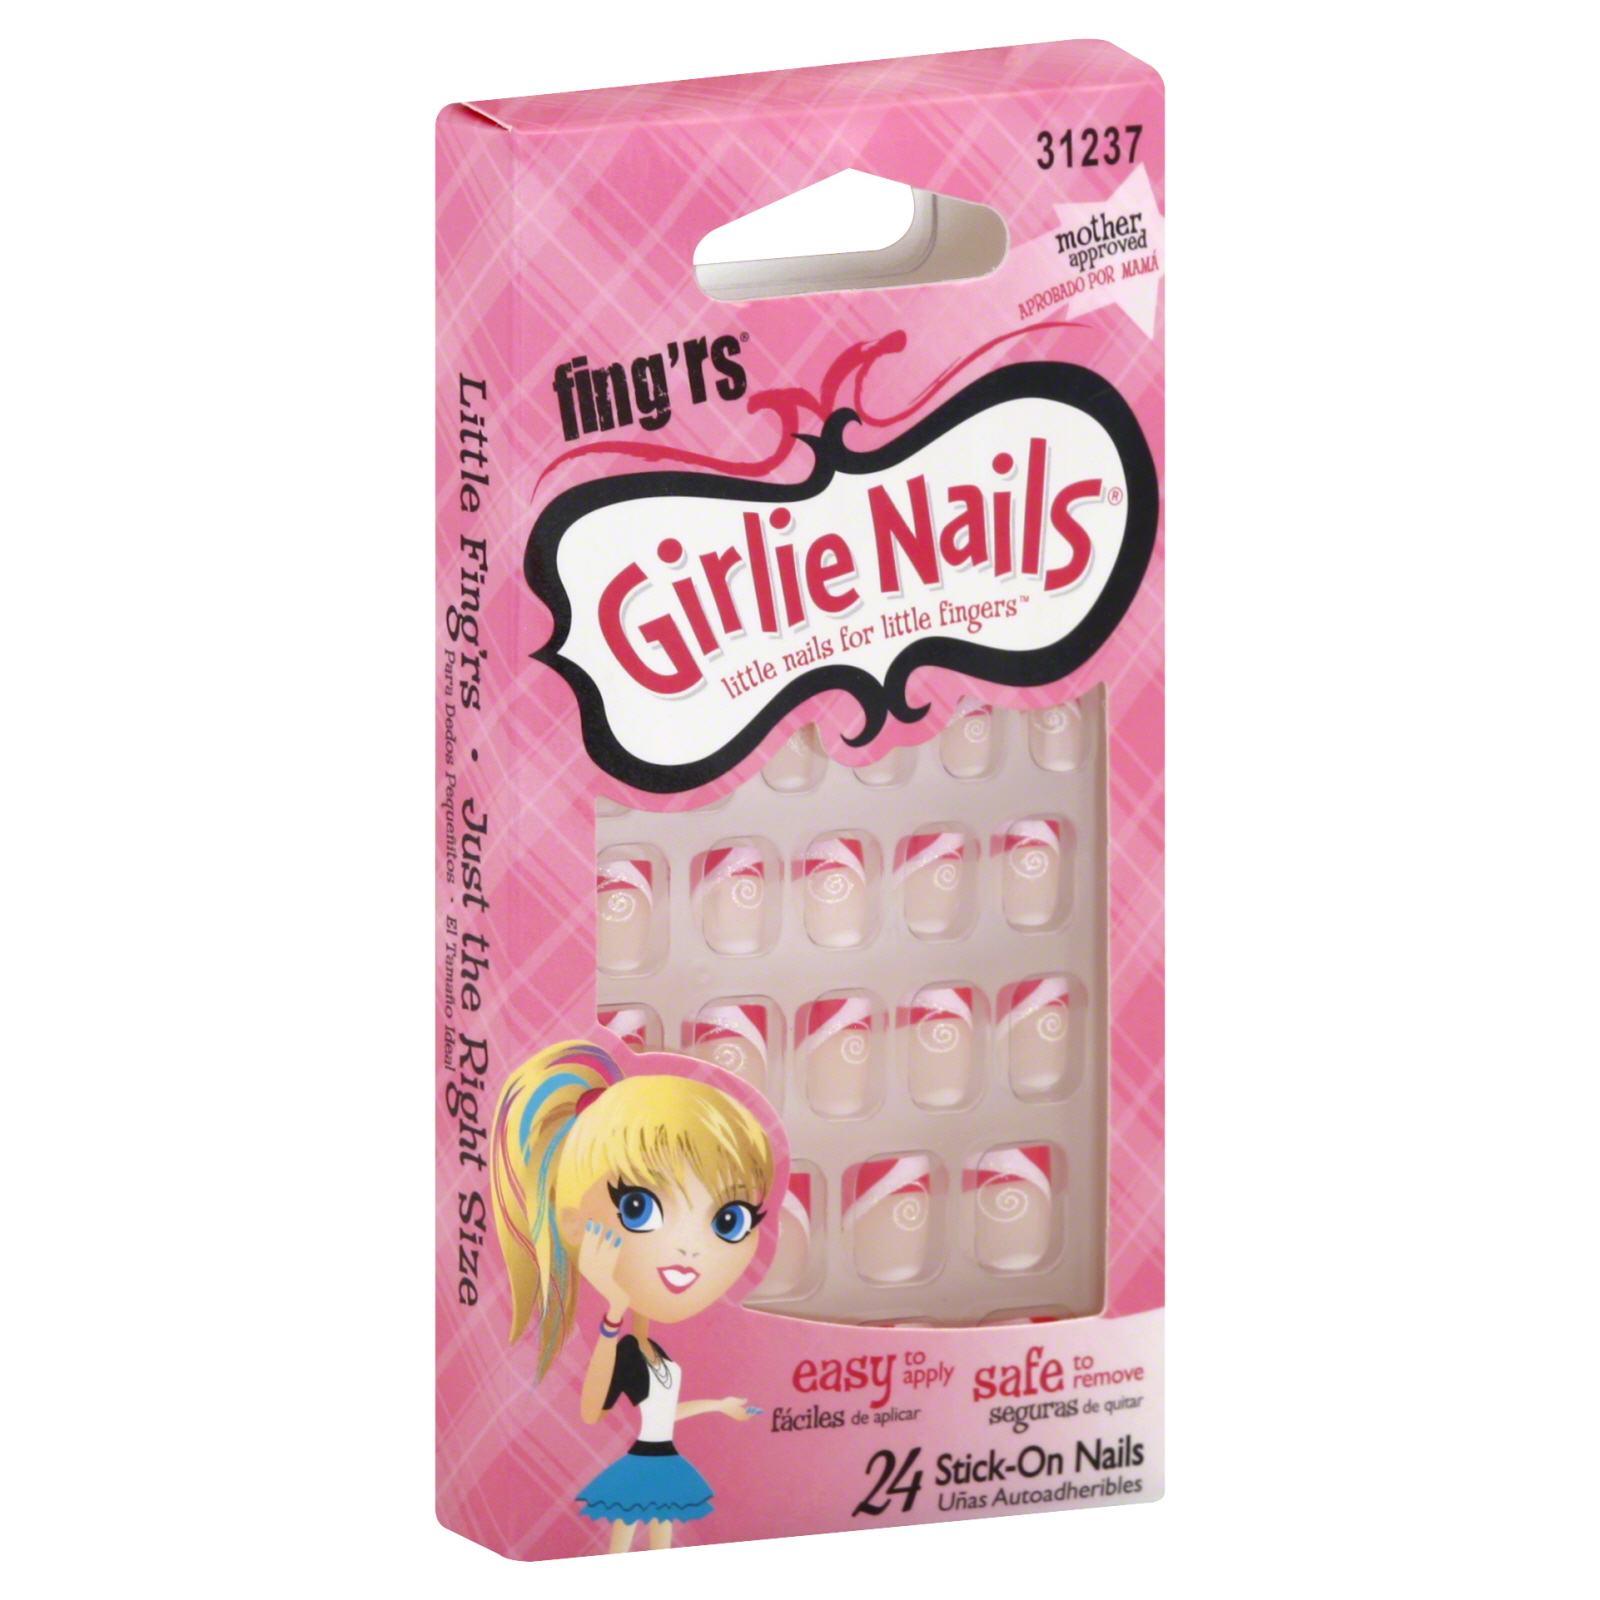 Girlie Nails Stick-On Nails, 24 nails